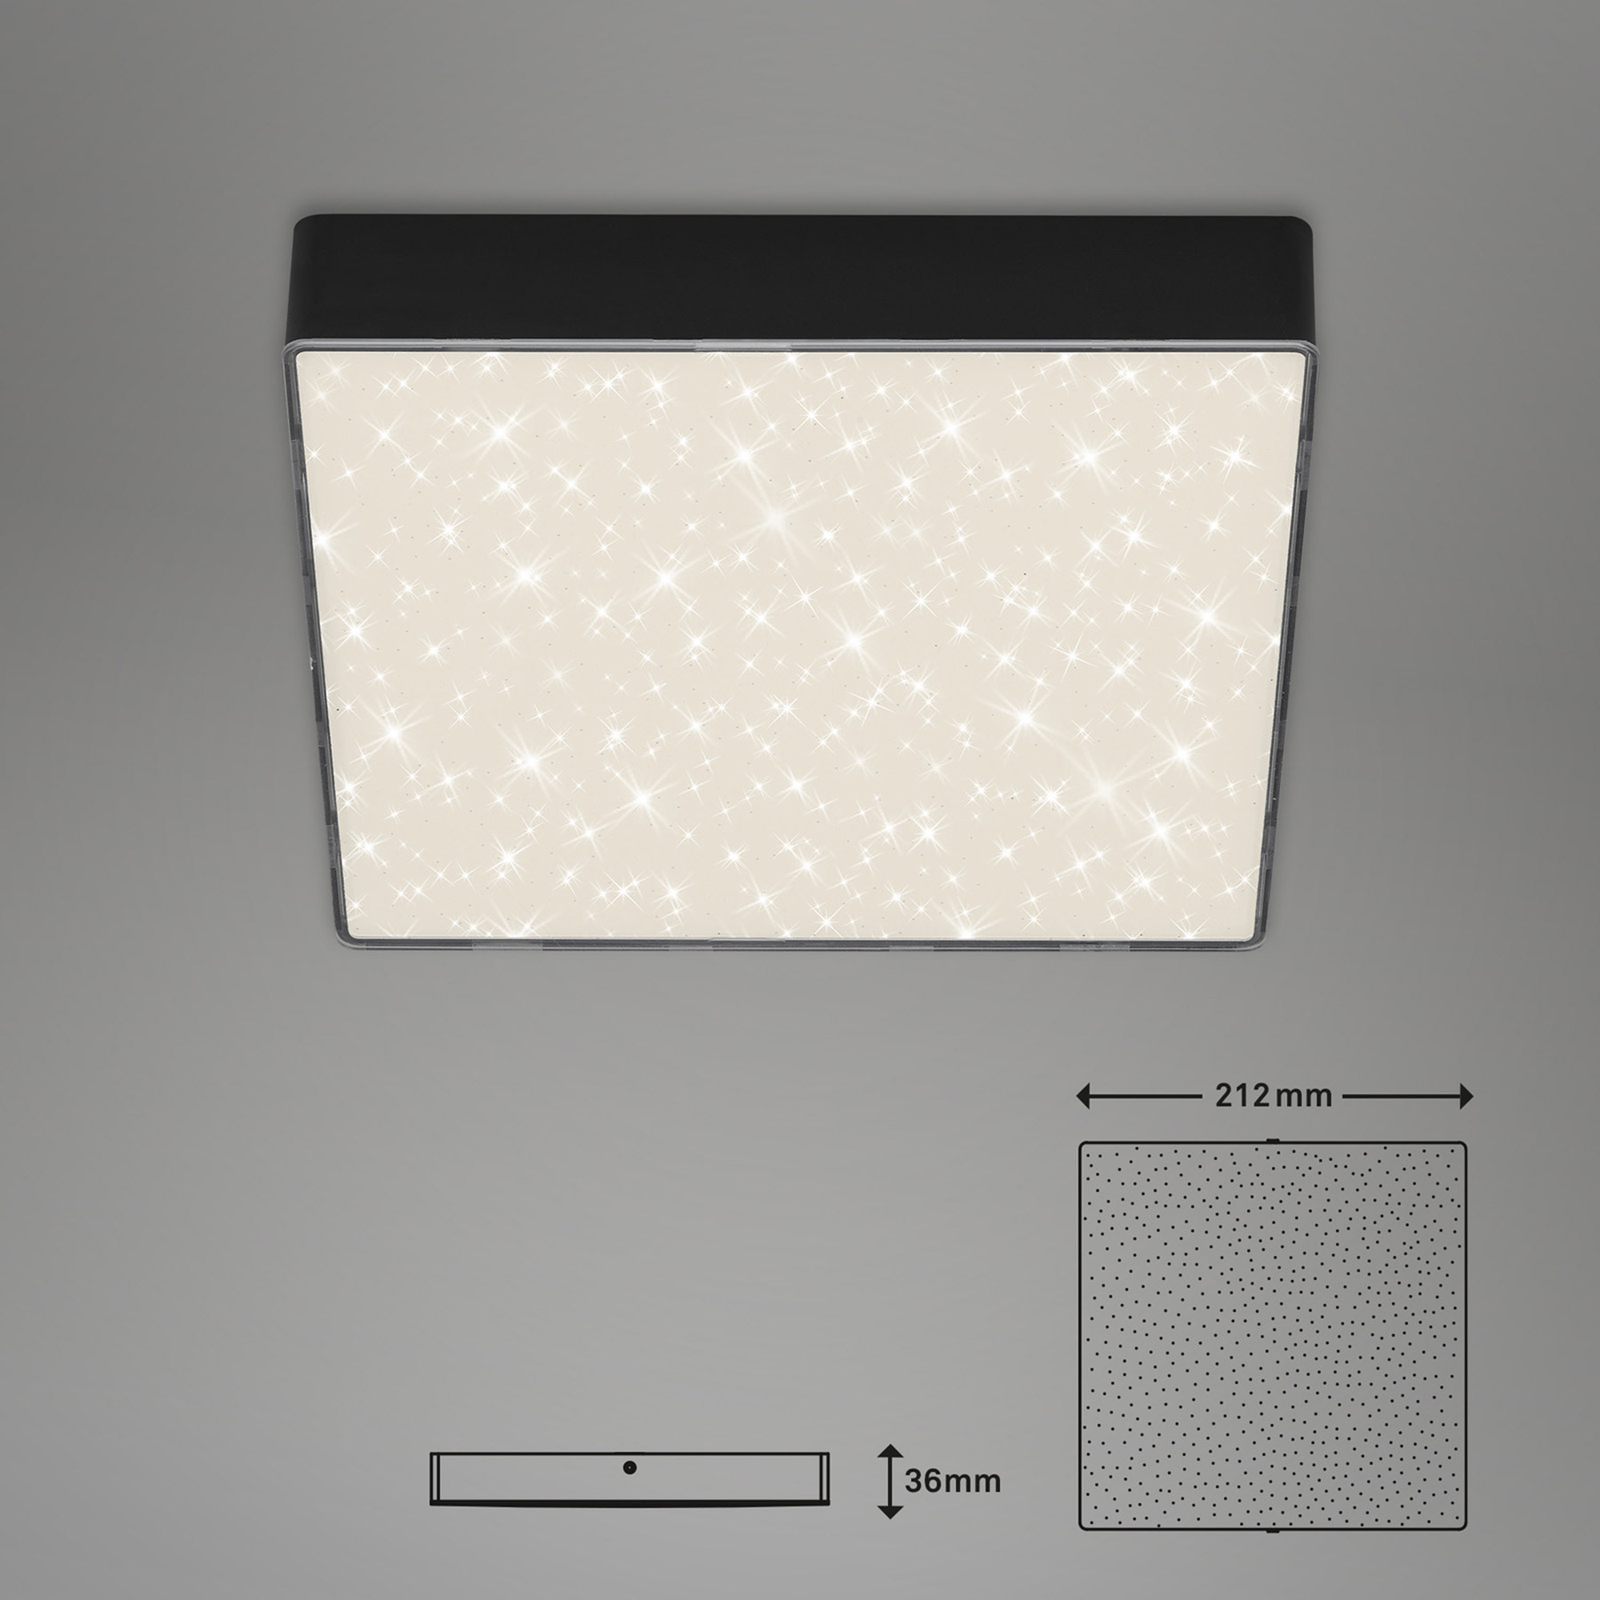 LED-Deckenlampe Flame Star, 21,2 x 21,2 cm schwarz